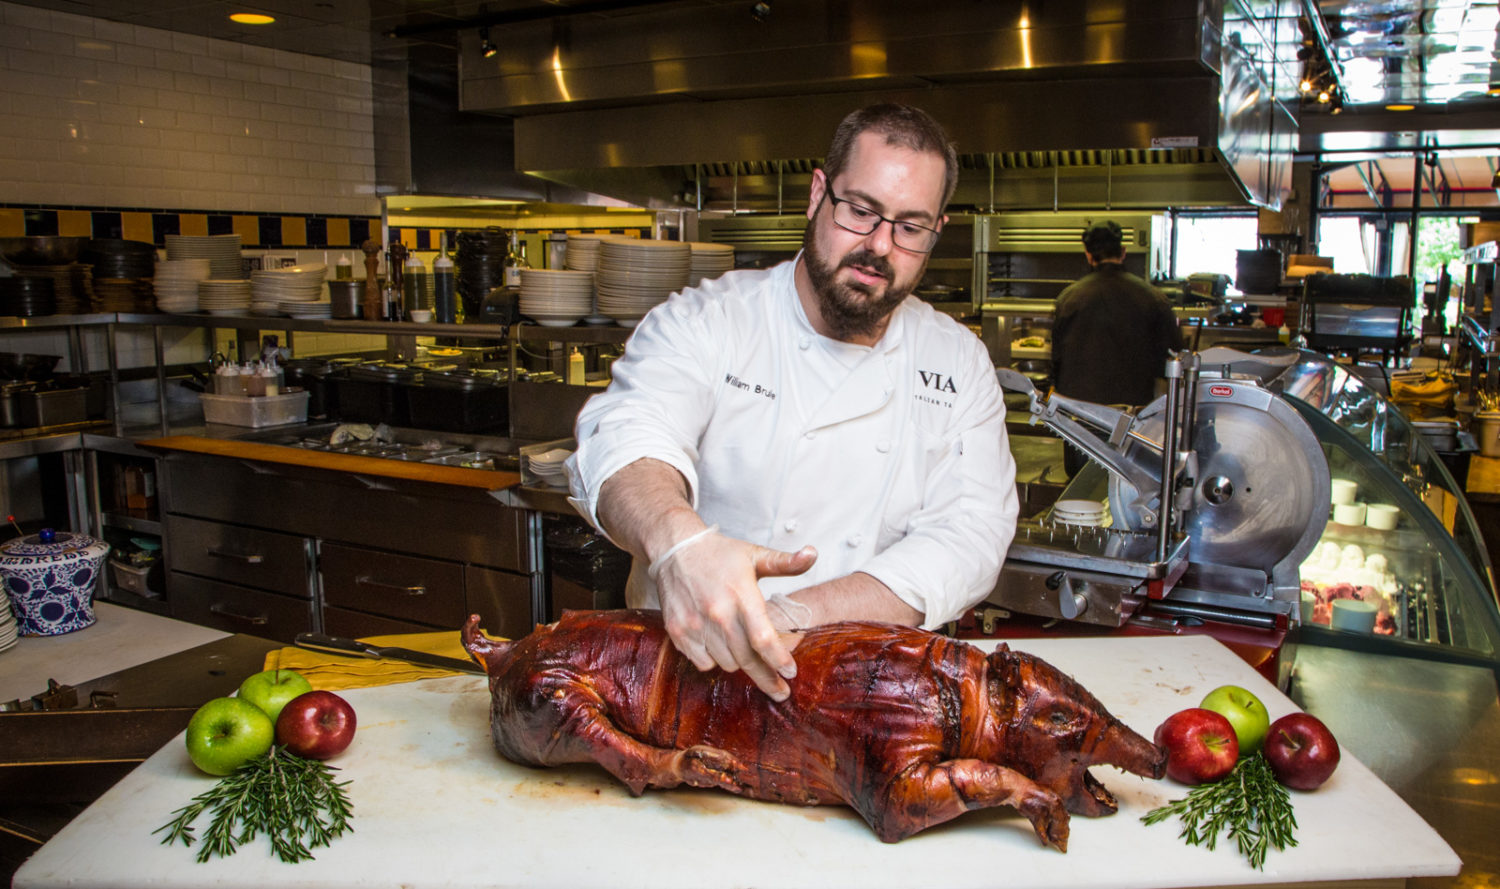 VIA’s executive chef, Bill Brule, Roasting a Pig for VIA's Italian Pig Roast.